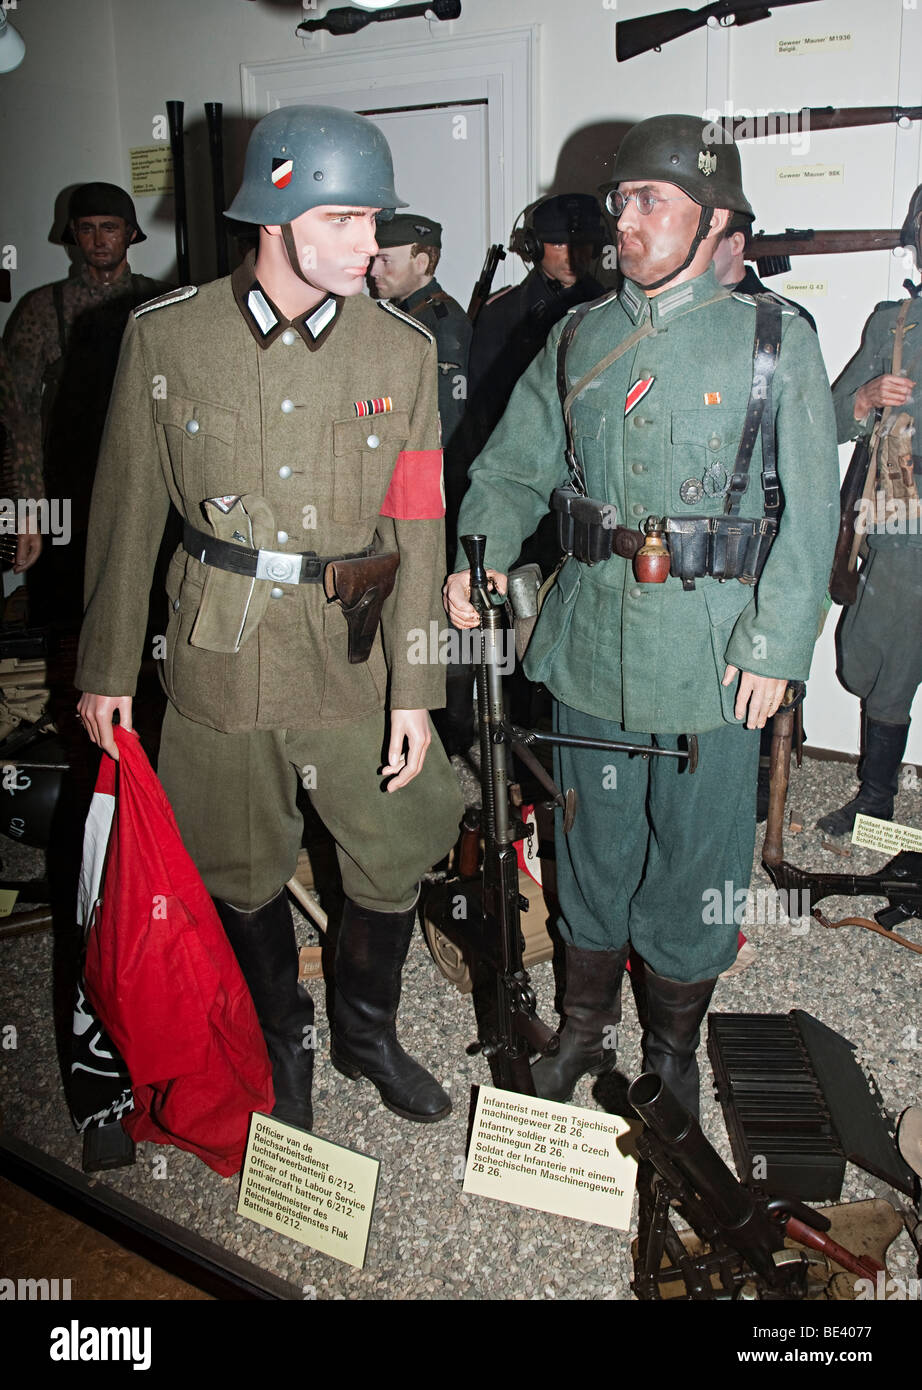 German Second World War soldiers in uniform in museum display Arnhem  Netherlands Stock Photo - Alamy